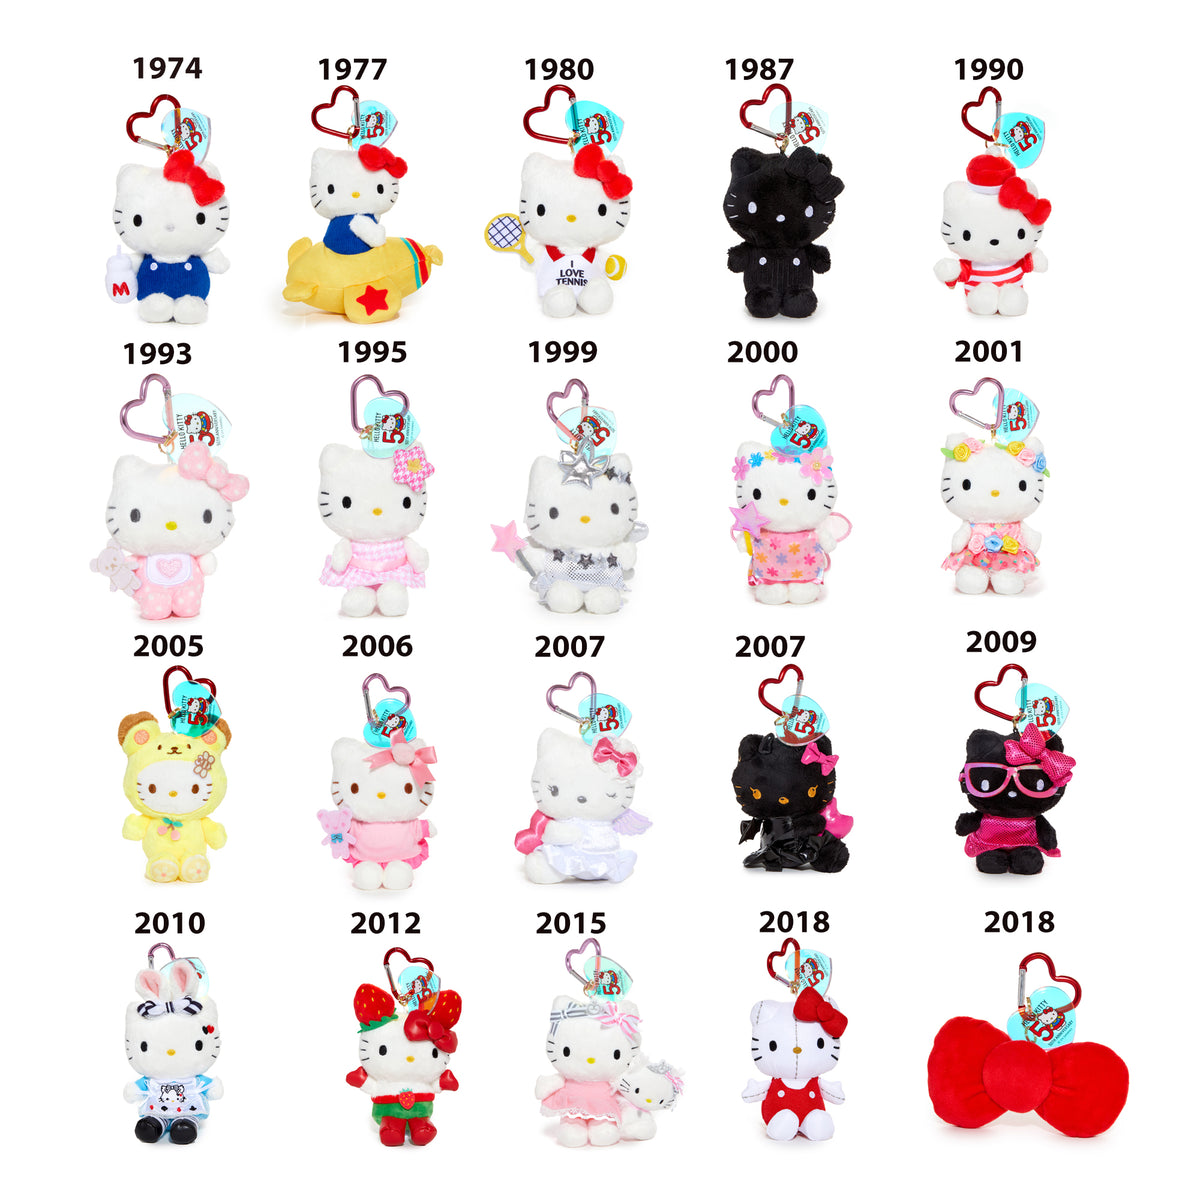 Hello Kitty 50th Anniversary Plush Mascot (2010) Plush Global Original   